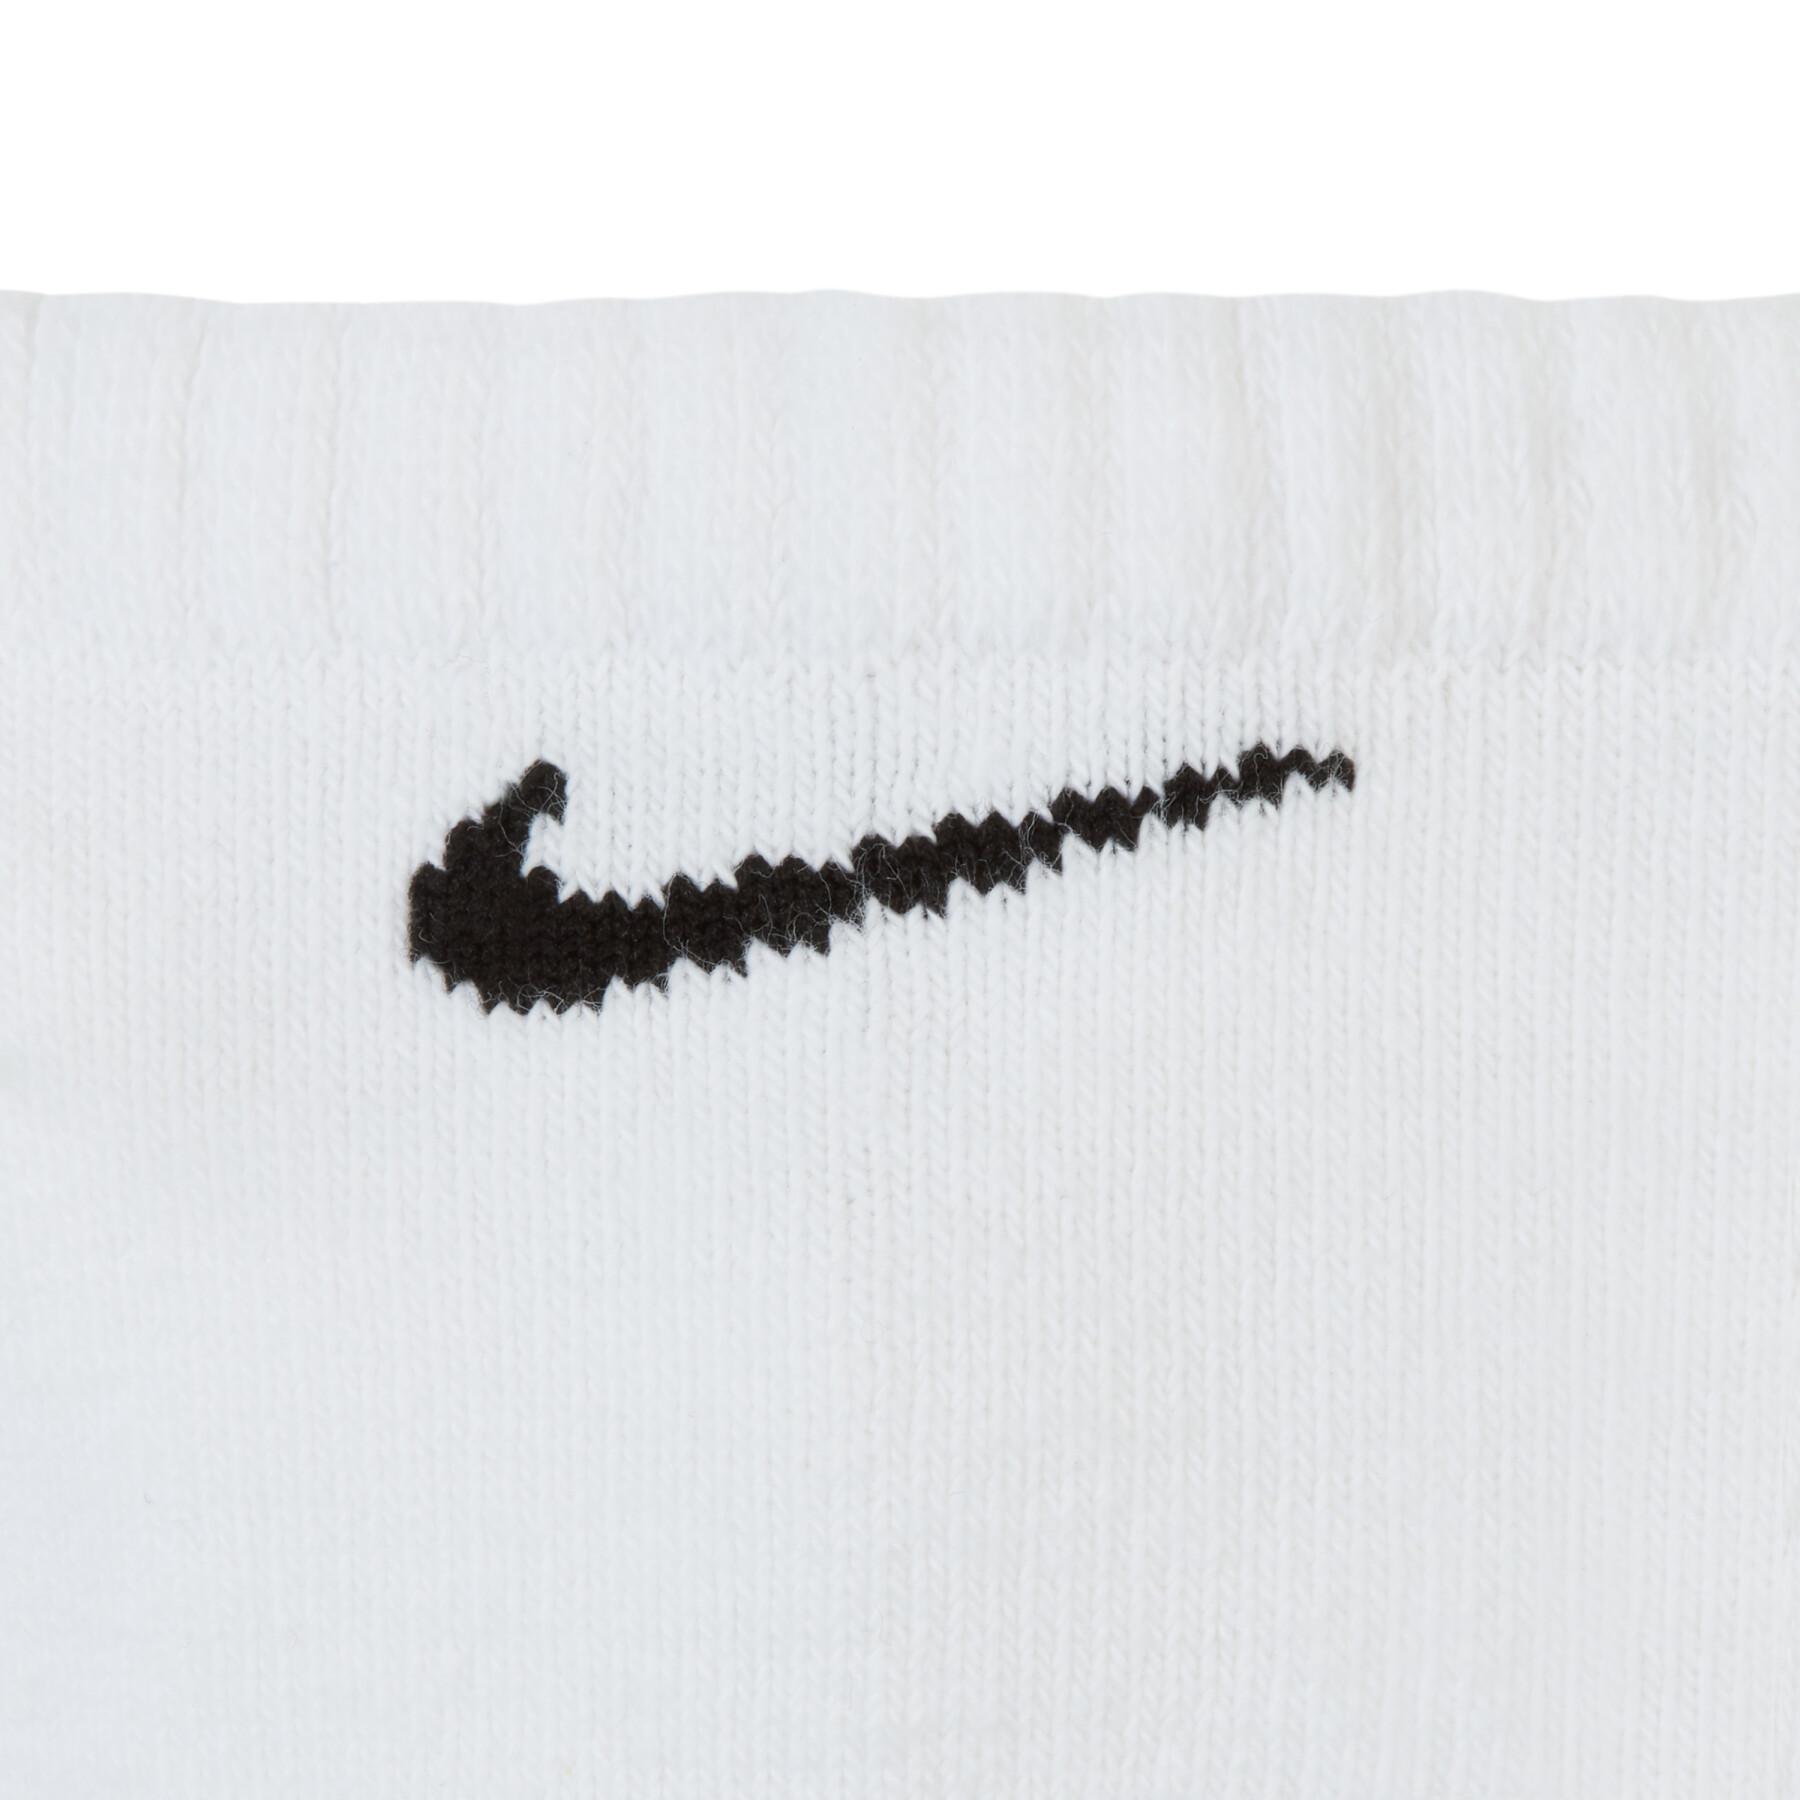 Football Socks Nike Everyday Cushioned (x6)